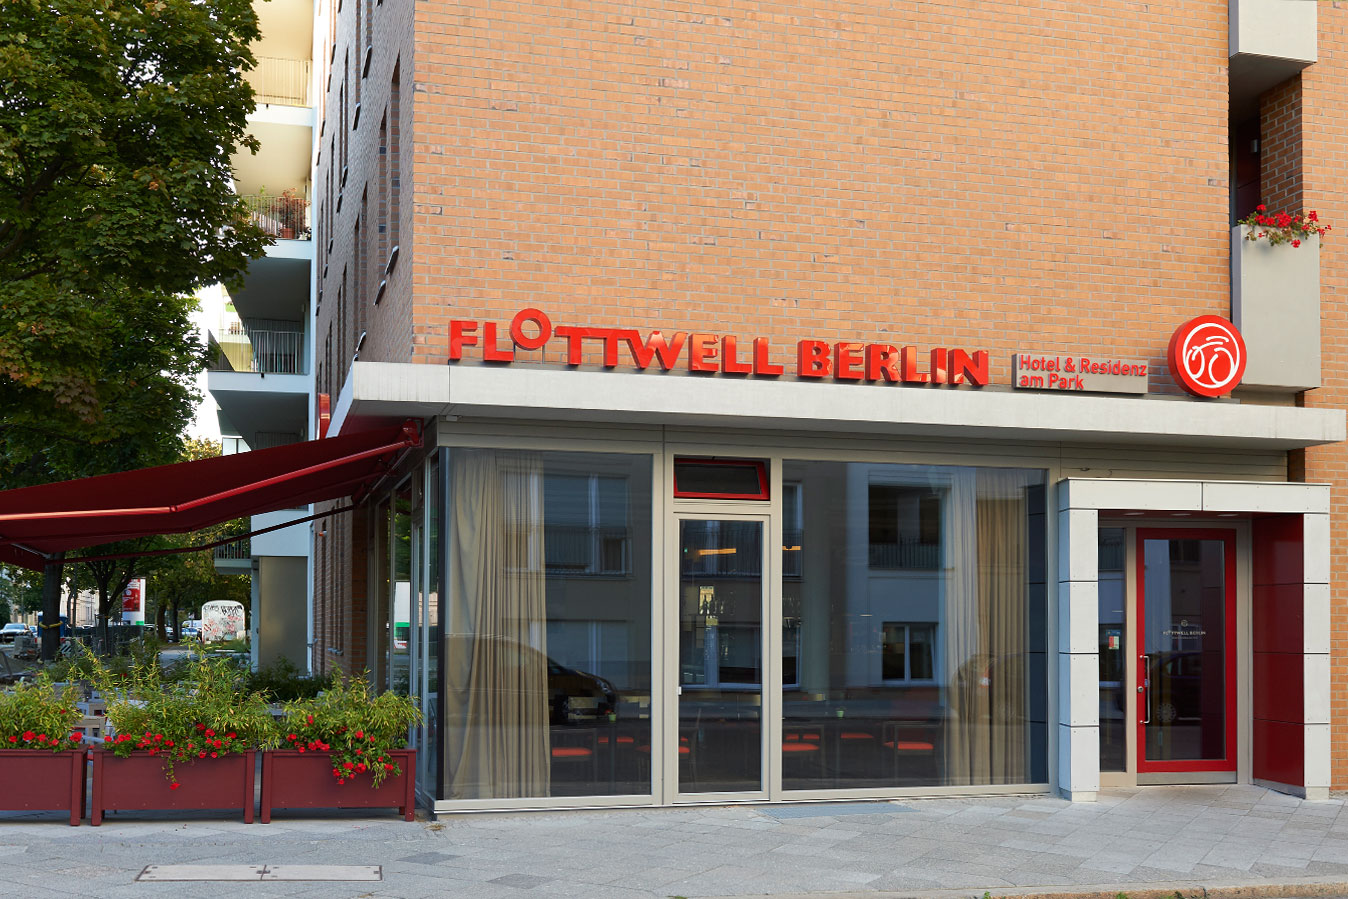 FLOTTWELL BERLIN Hotel - View entrance